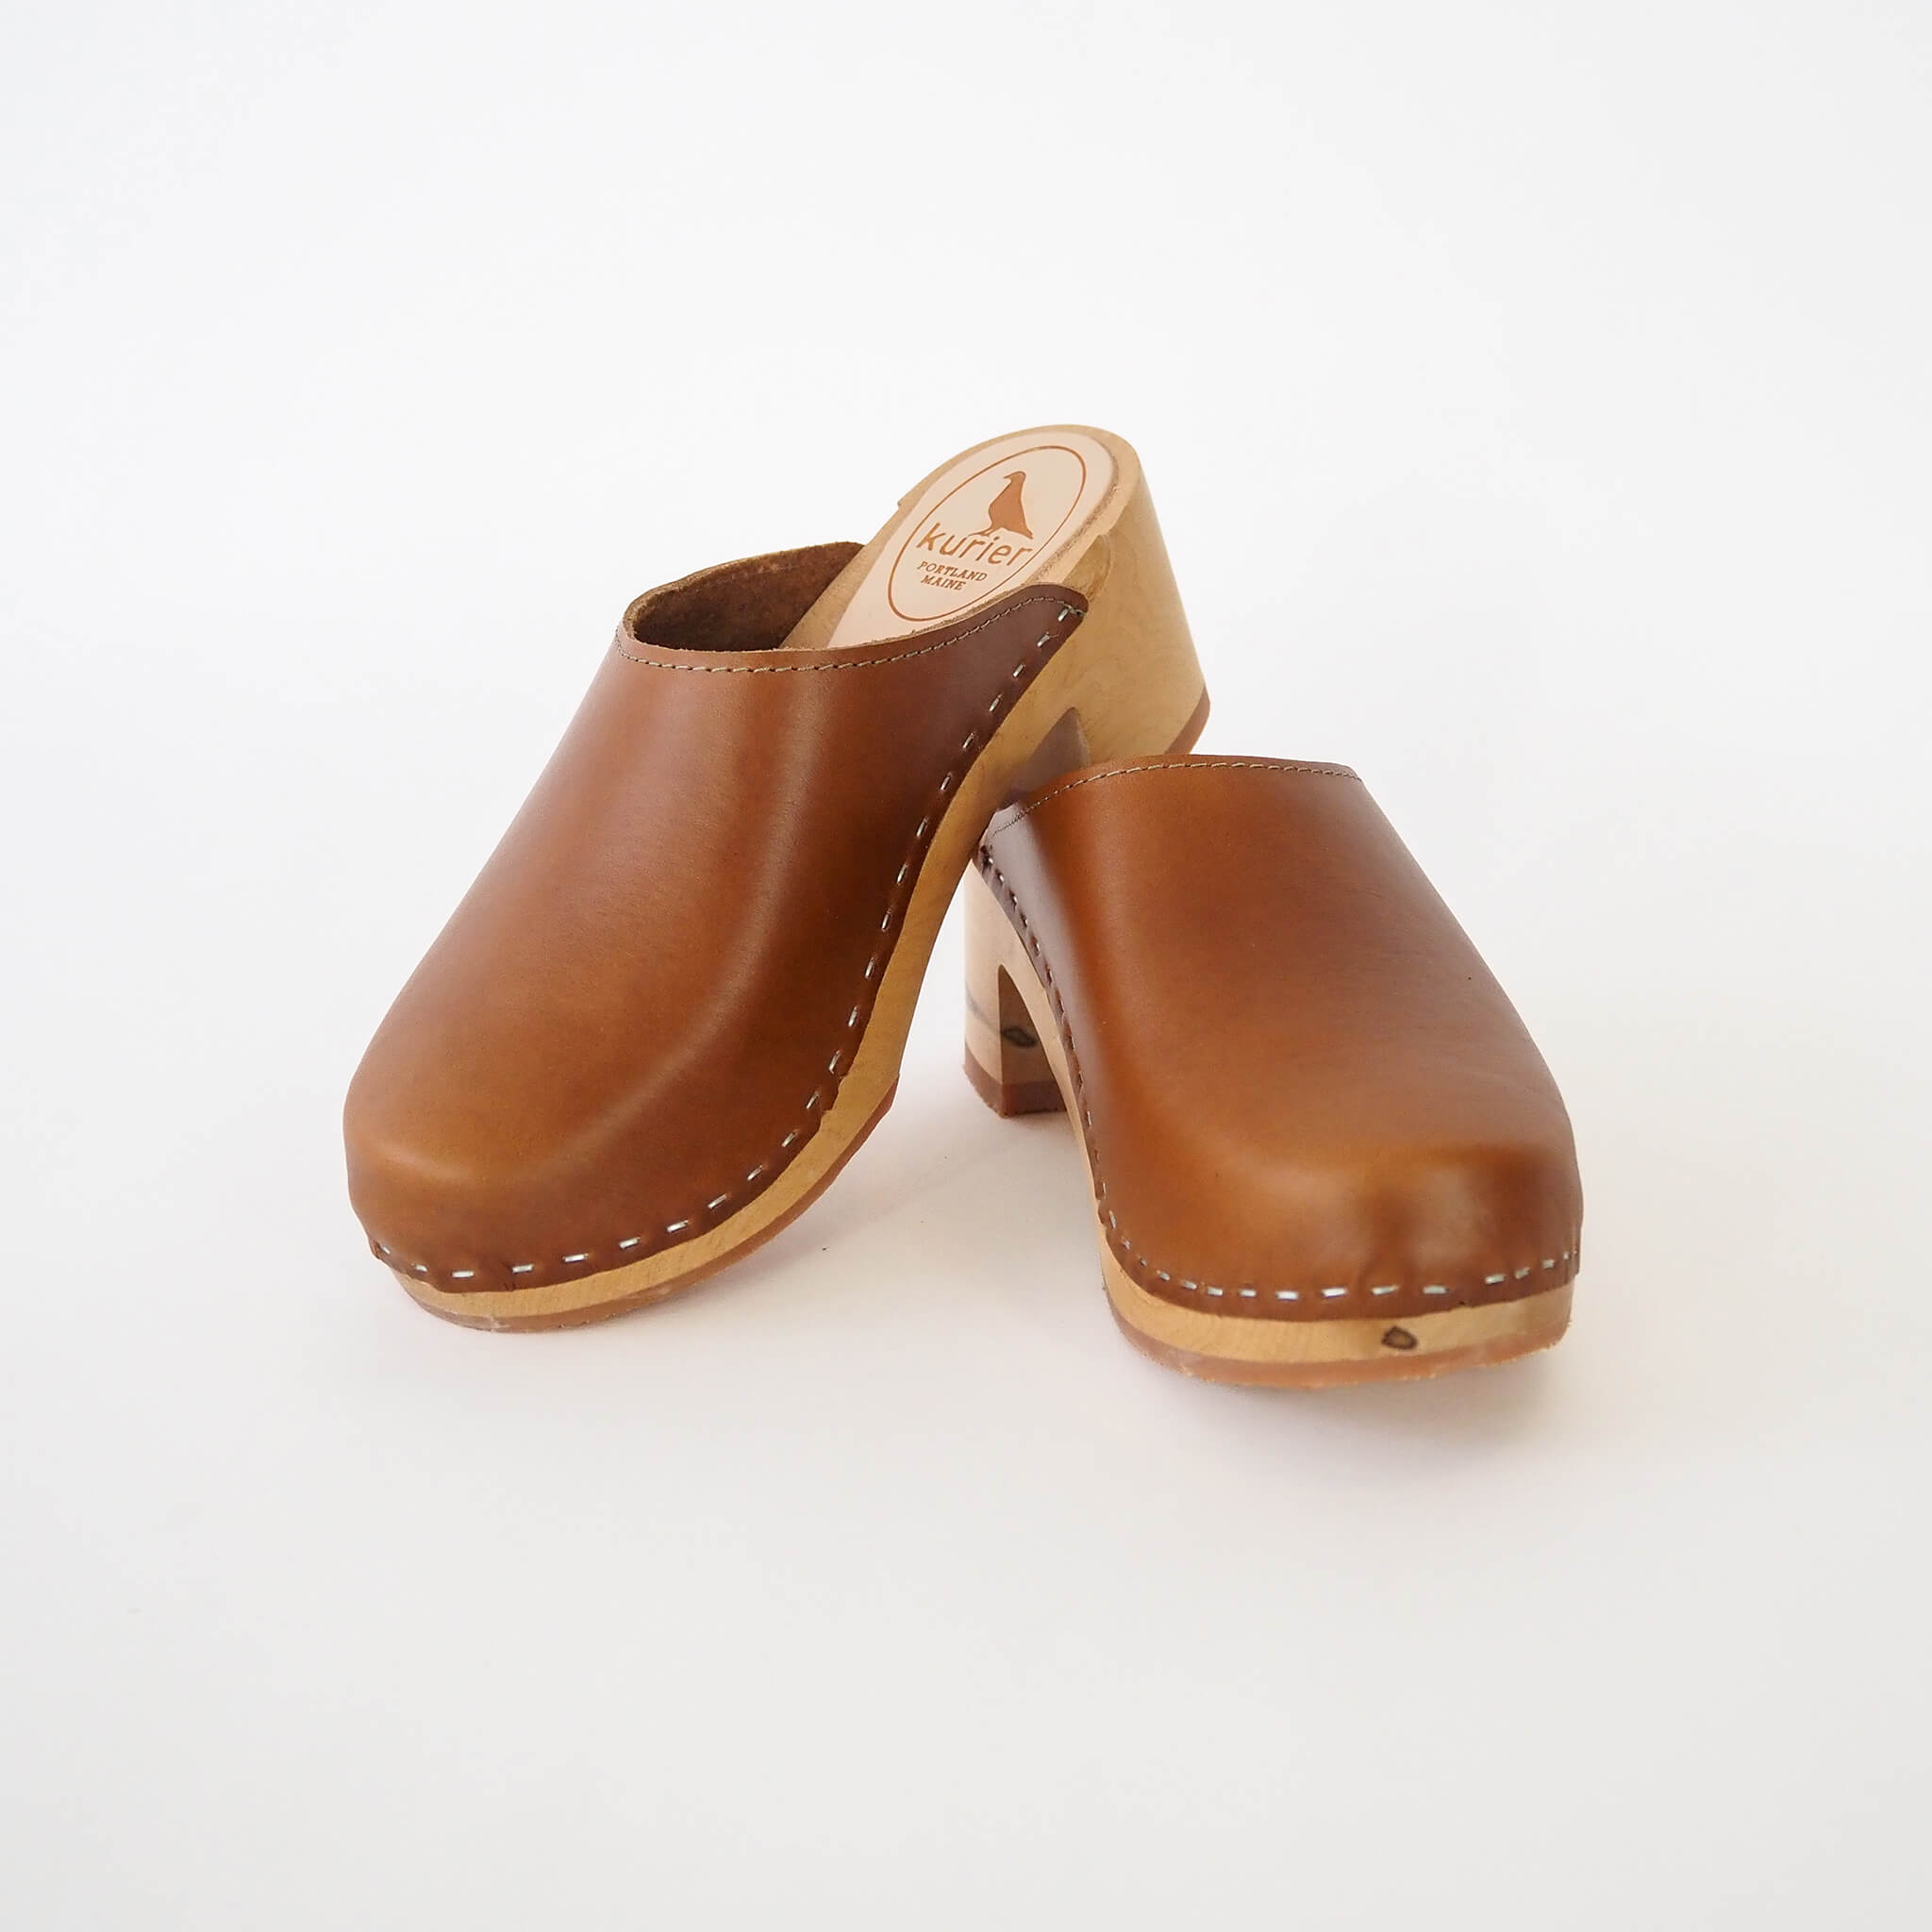 pepper clog high heel closed toe mule handmade american leather wood - pecan front view